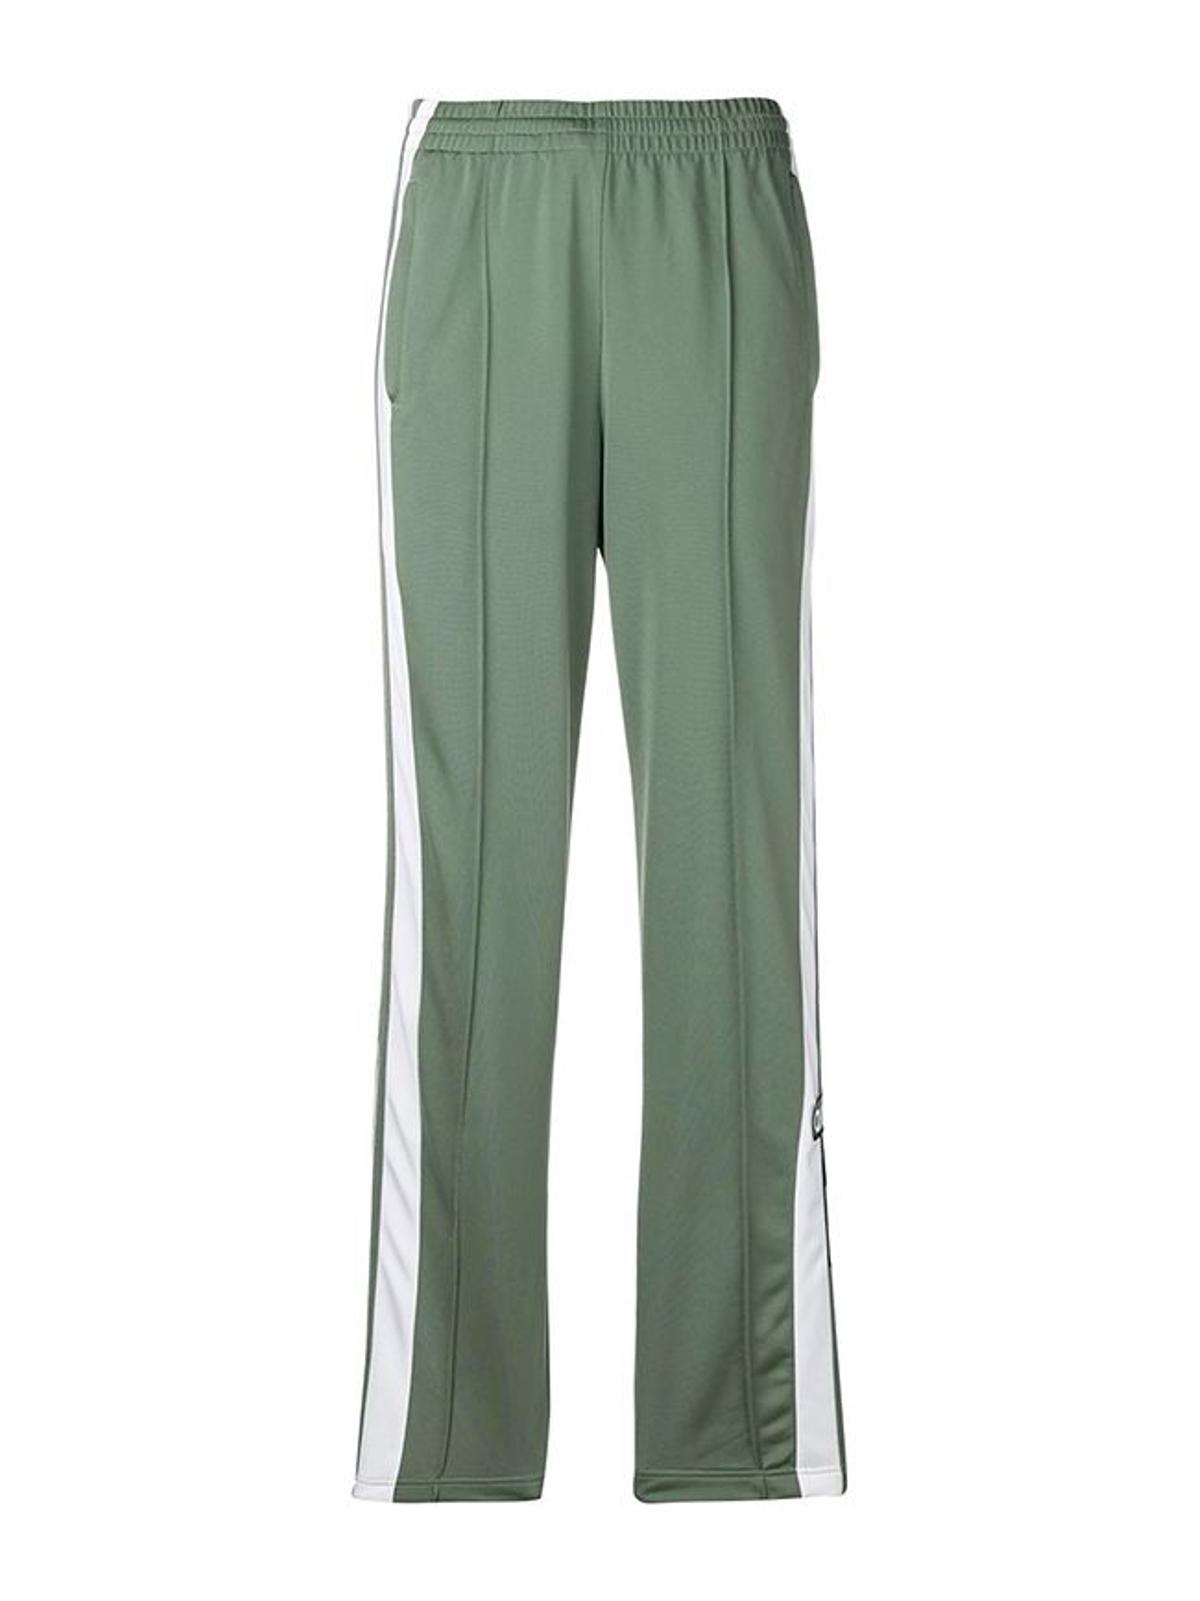 Pantalones verdes de Adidas